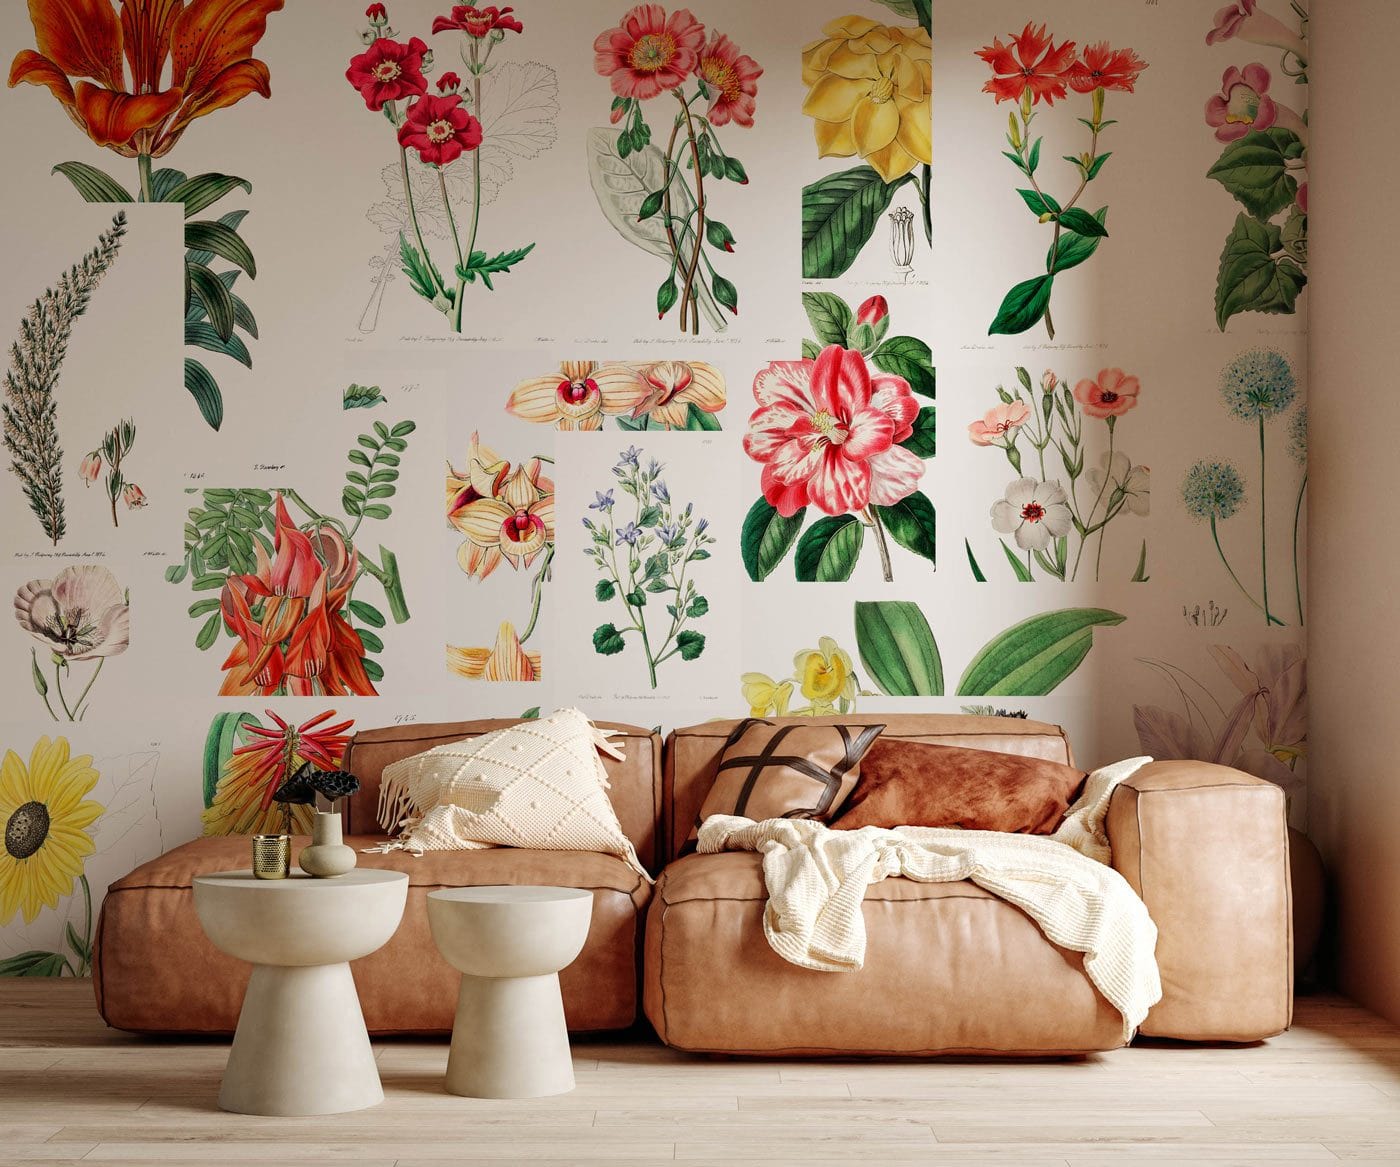 Botany Flower Wallpaper Mural for the Decoration of the Living Room